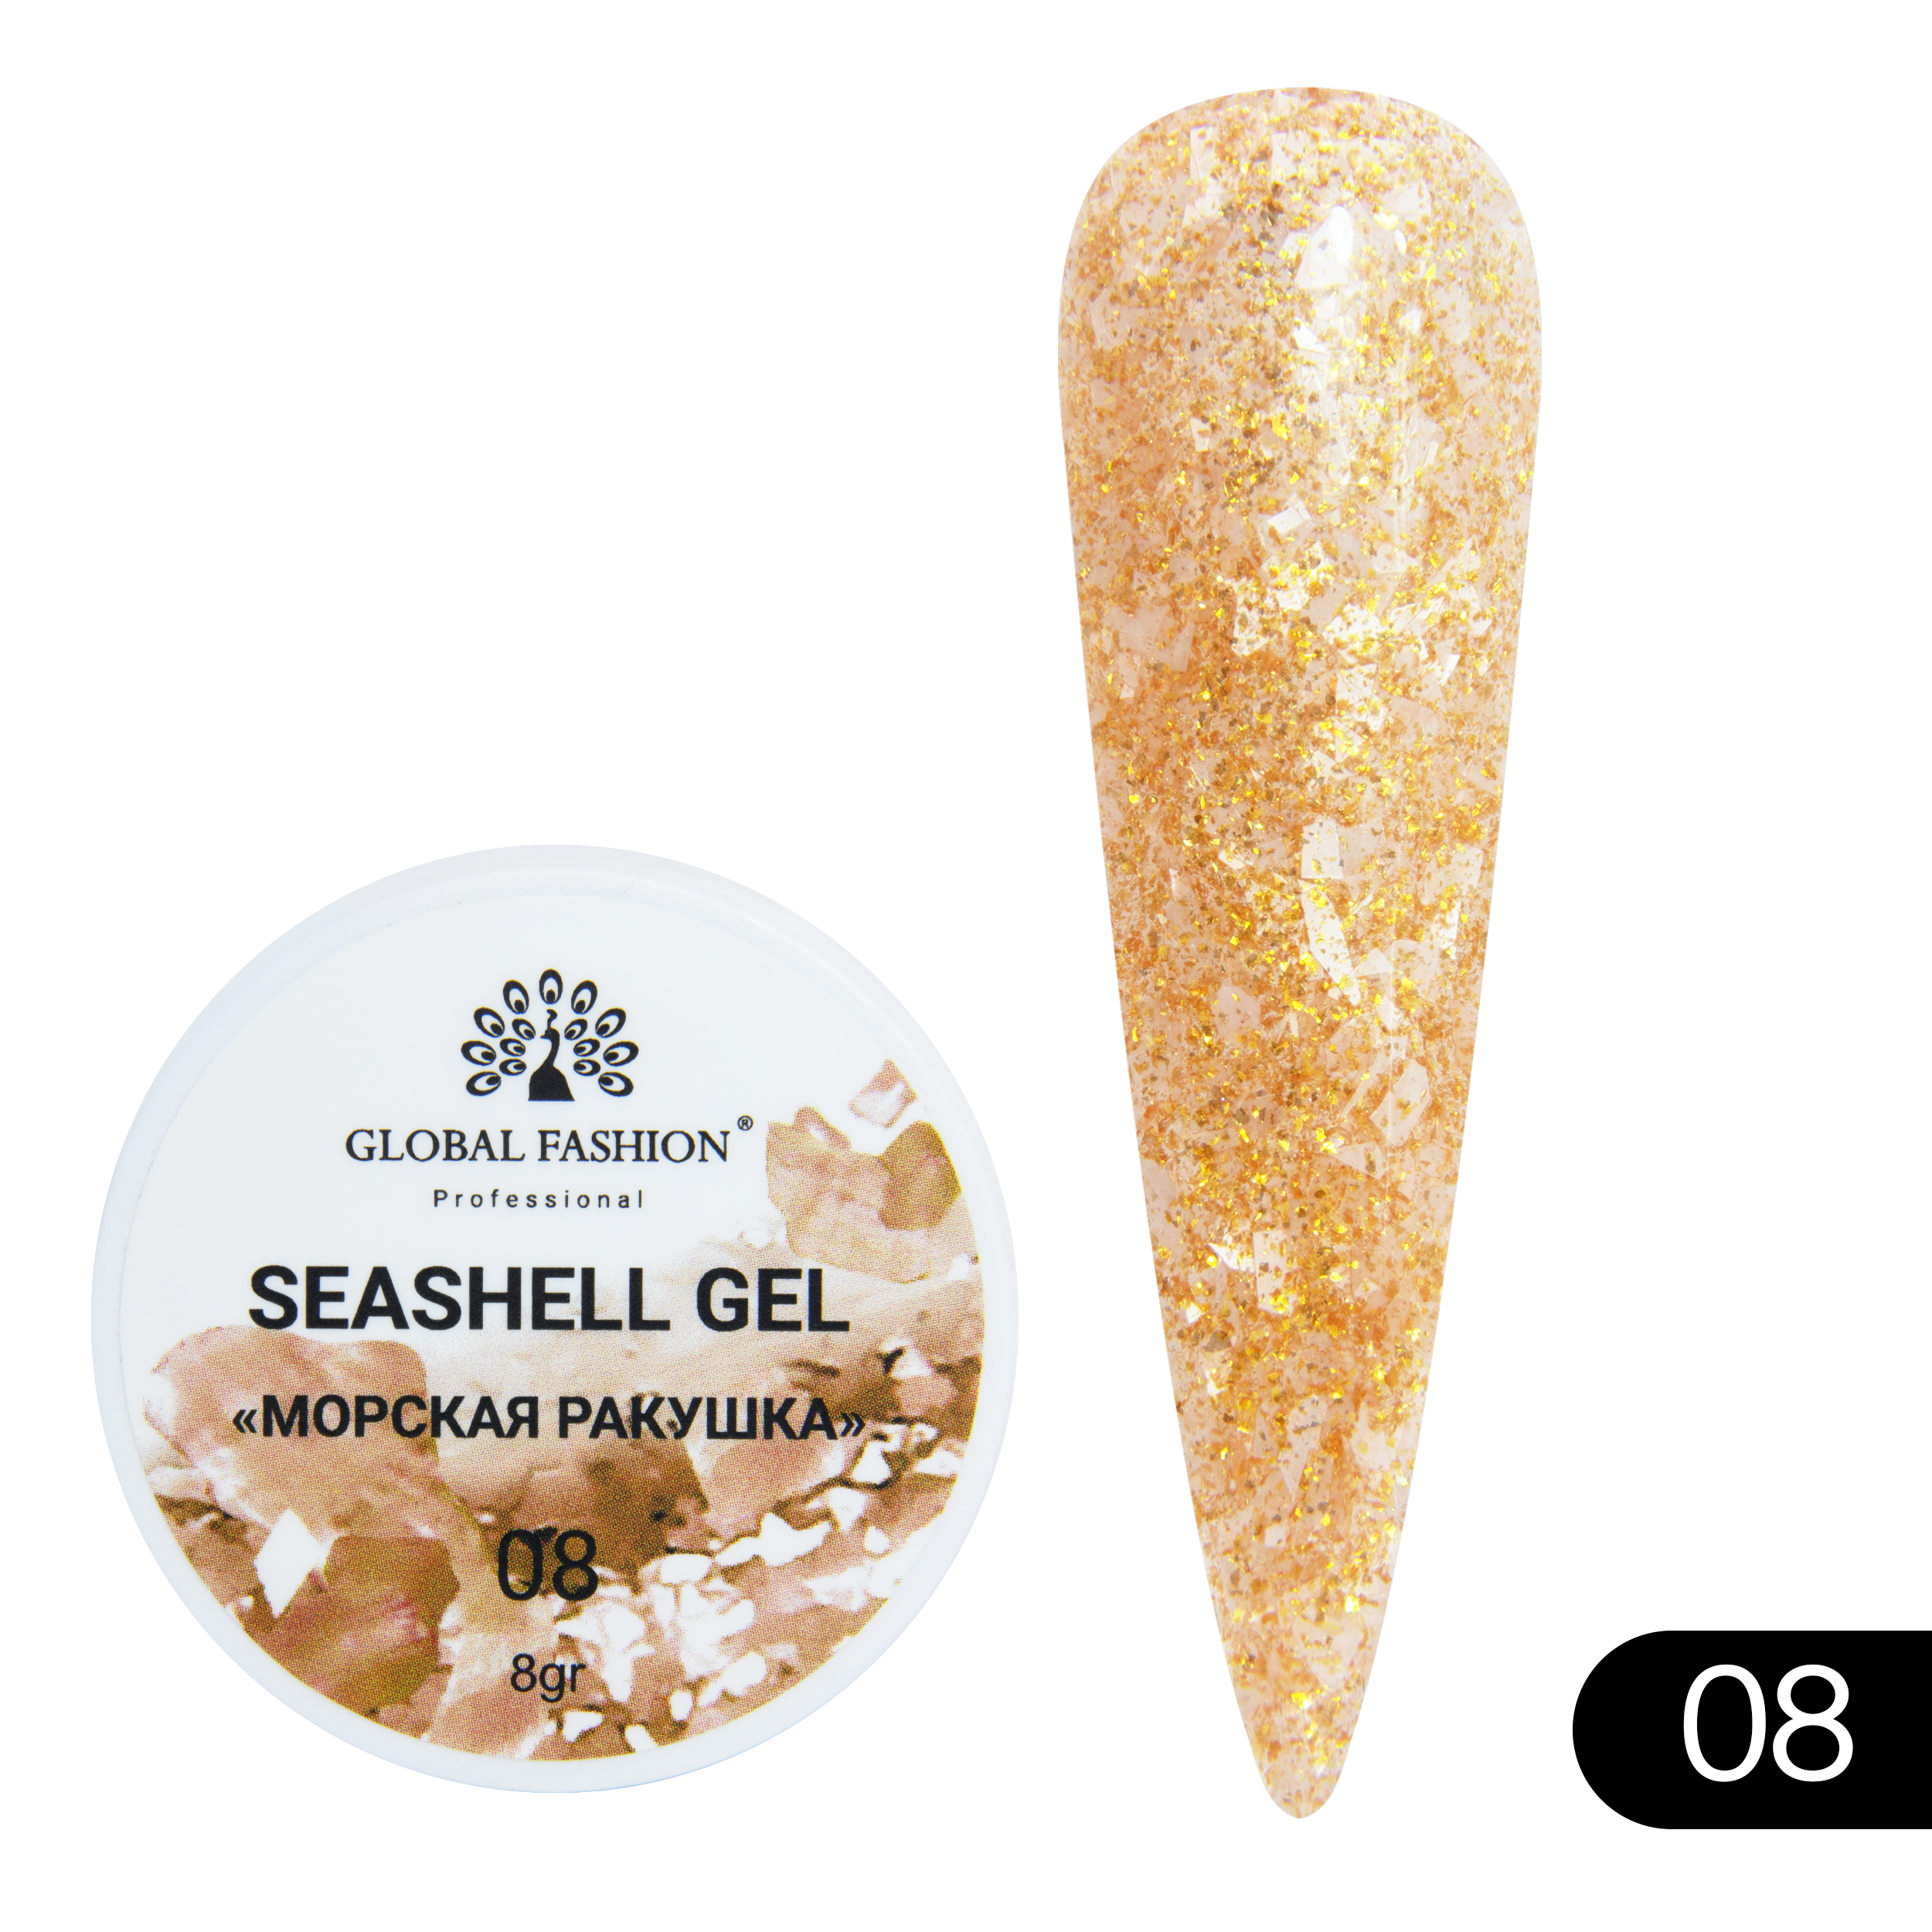 Гель-краска Global Fashion для ногтей с мраморным эффектом ракушки №08 Seashell Gel 5 г сачок для аквариумных рыб дарэлл 10 12 см